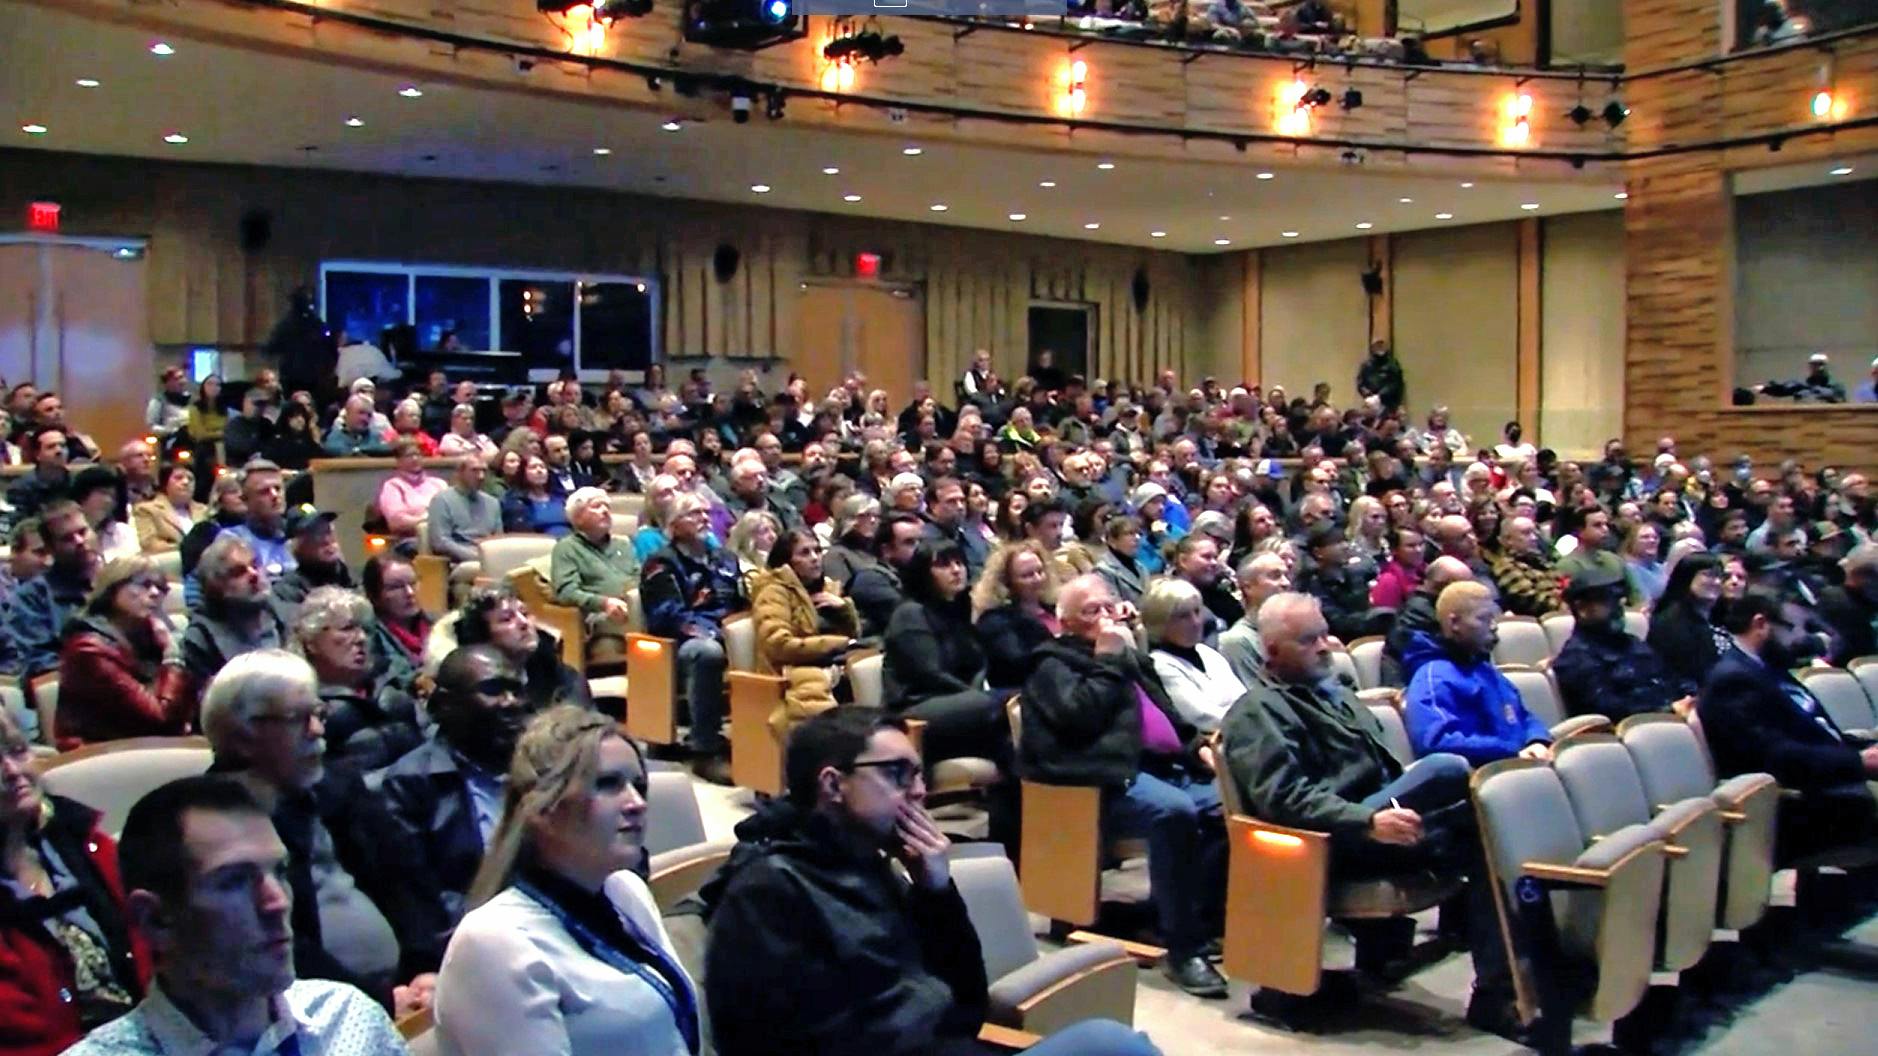 The first public presentation by Chuck Marohn drew a large crowd to the Esplanade on Feb. 7, 2023.